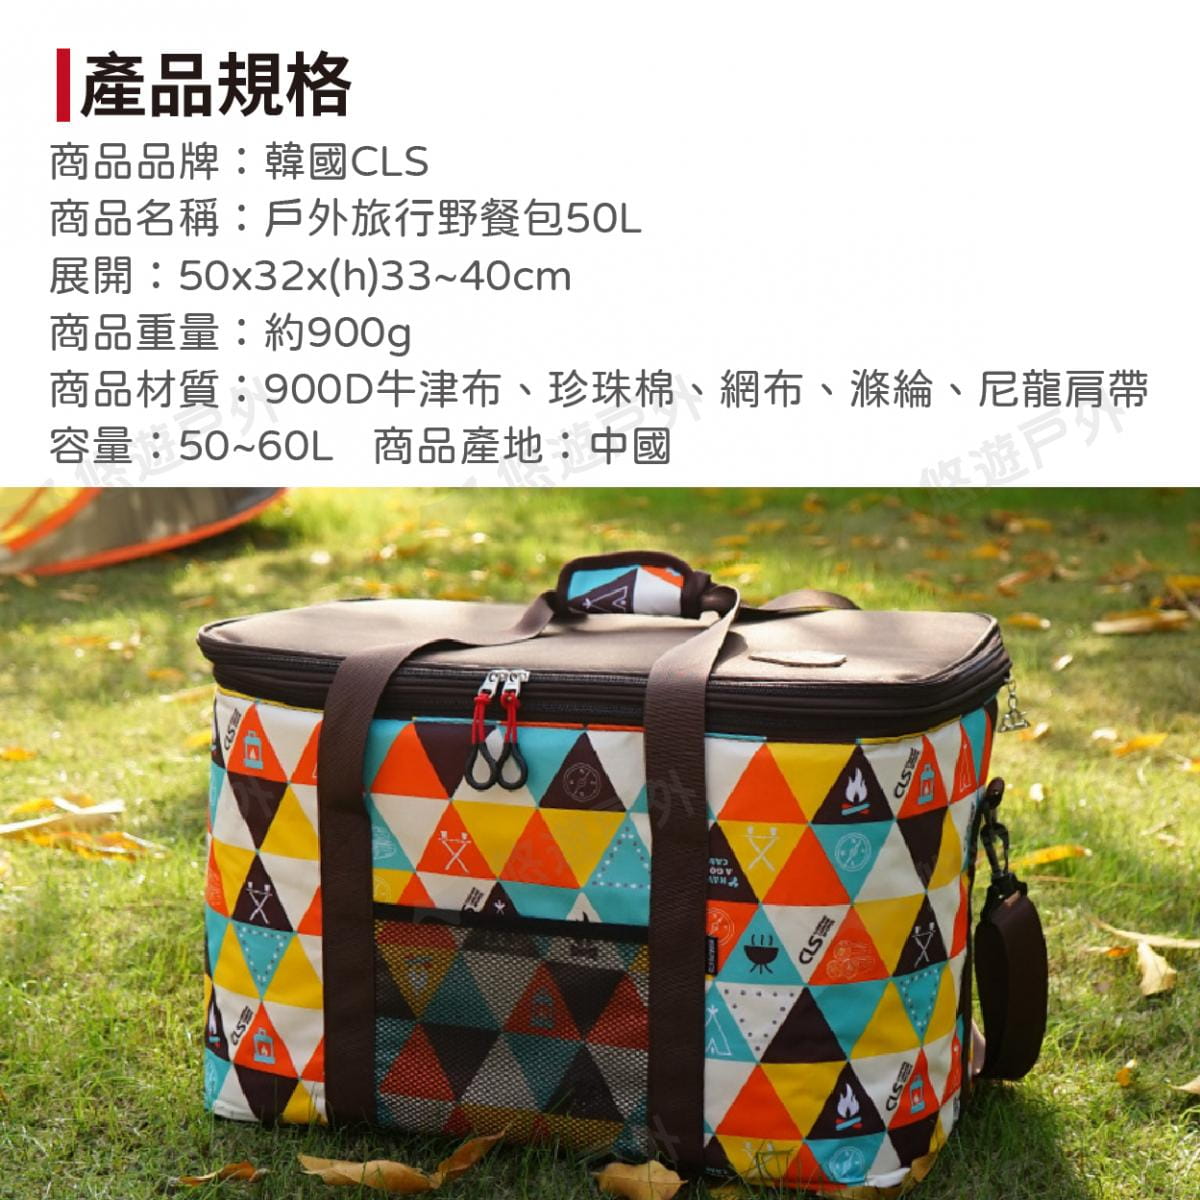 【CLS】韓國 旅行野餐包 50L大容量 野營包 可調節高度 收納包 露營手提包 自駕旅行 野餐包 10